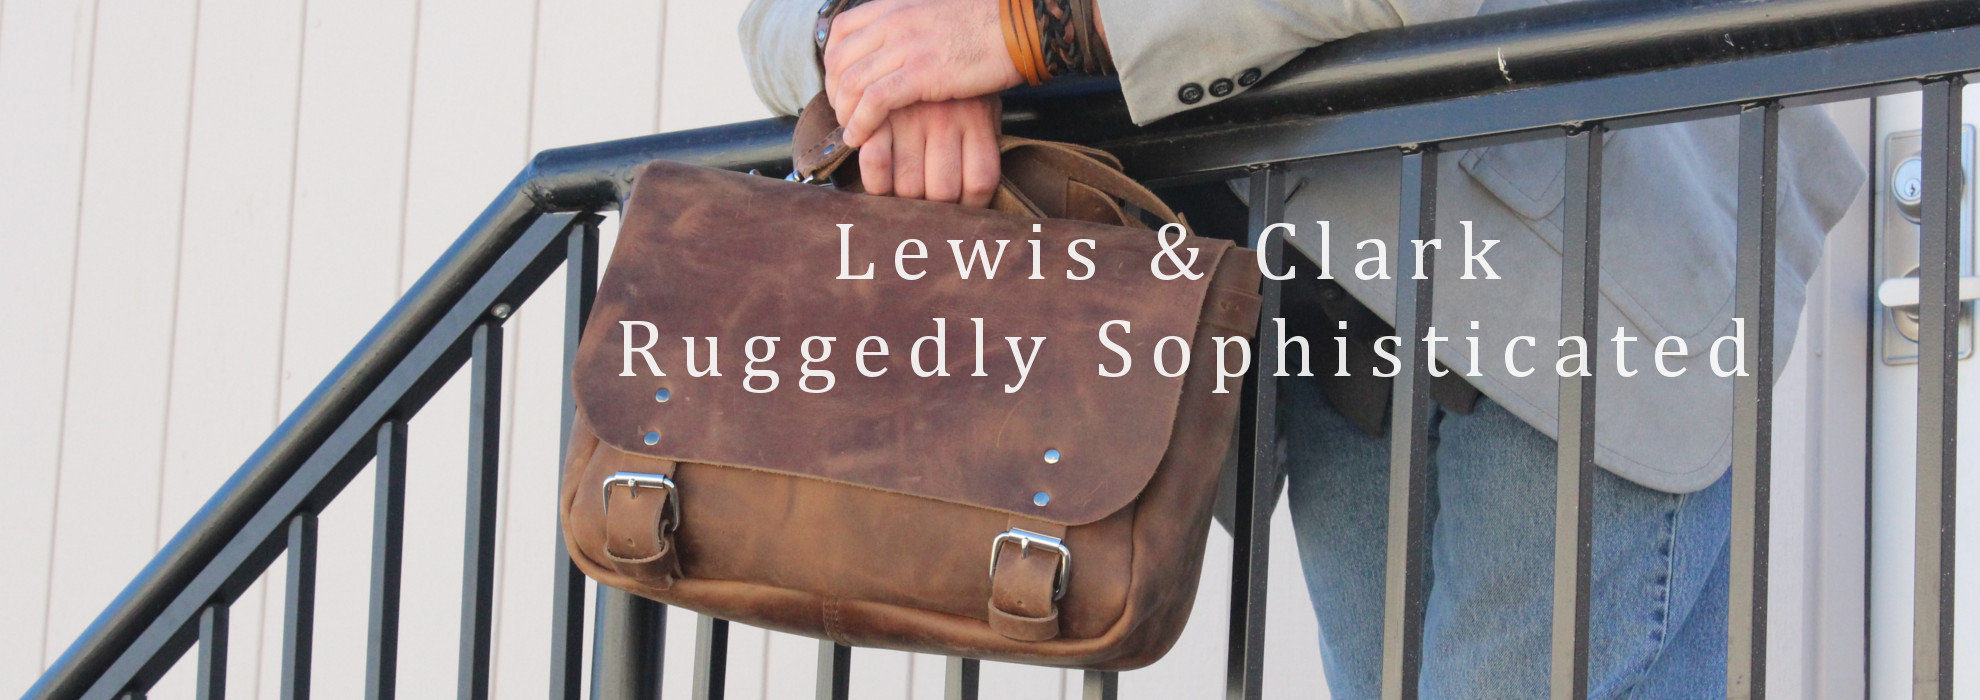 premium leather luggage & canvas bags - updn leathergoods